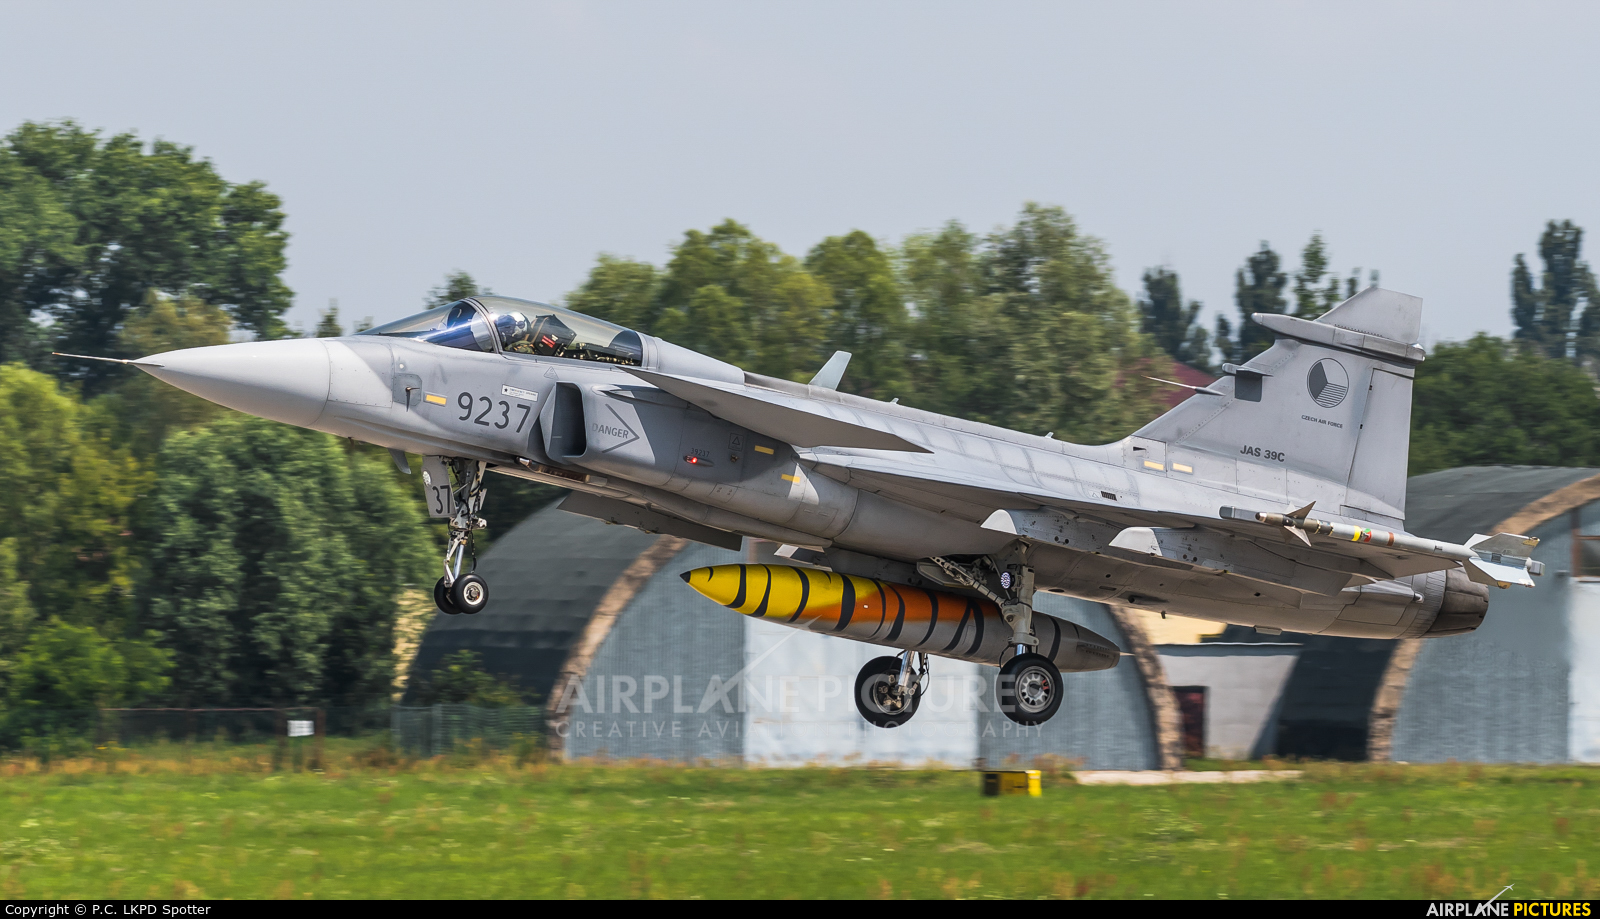 Czech - Air Force 9237 aircraft at Pardubice